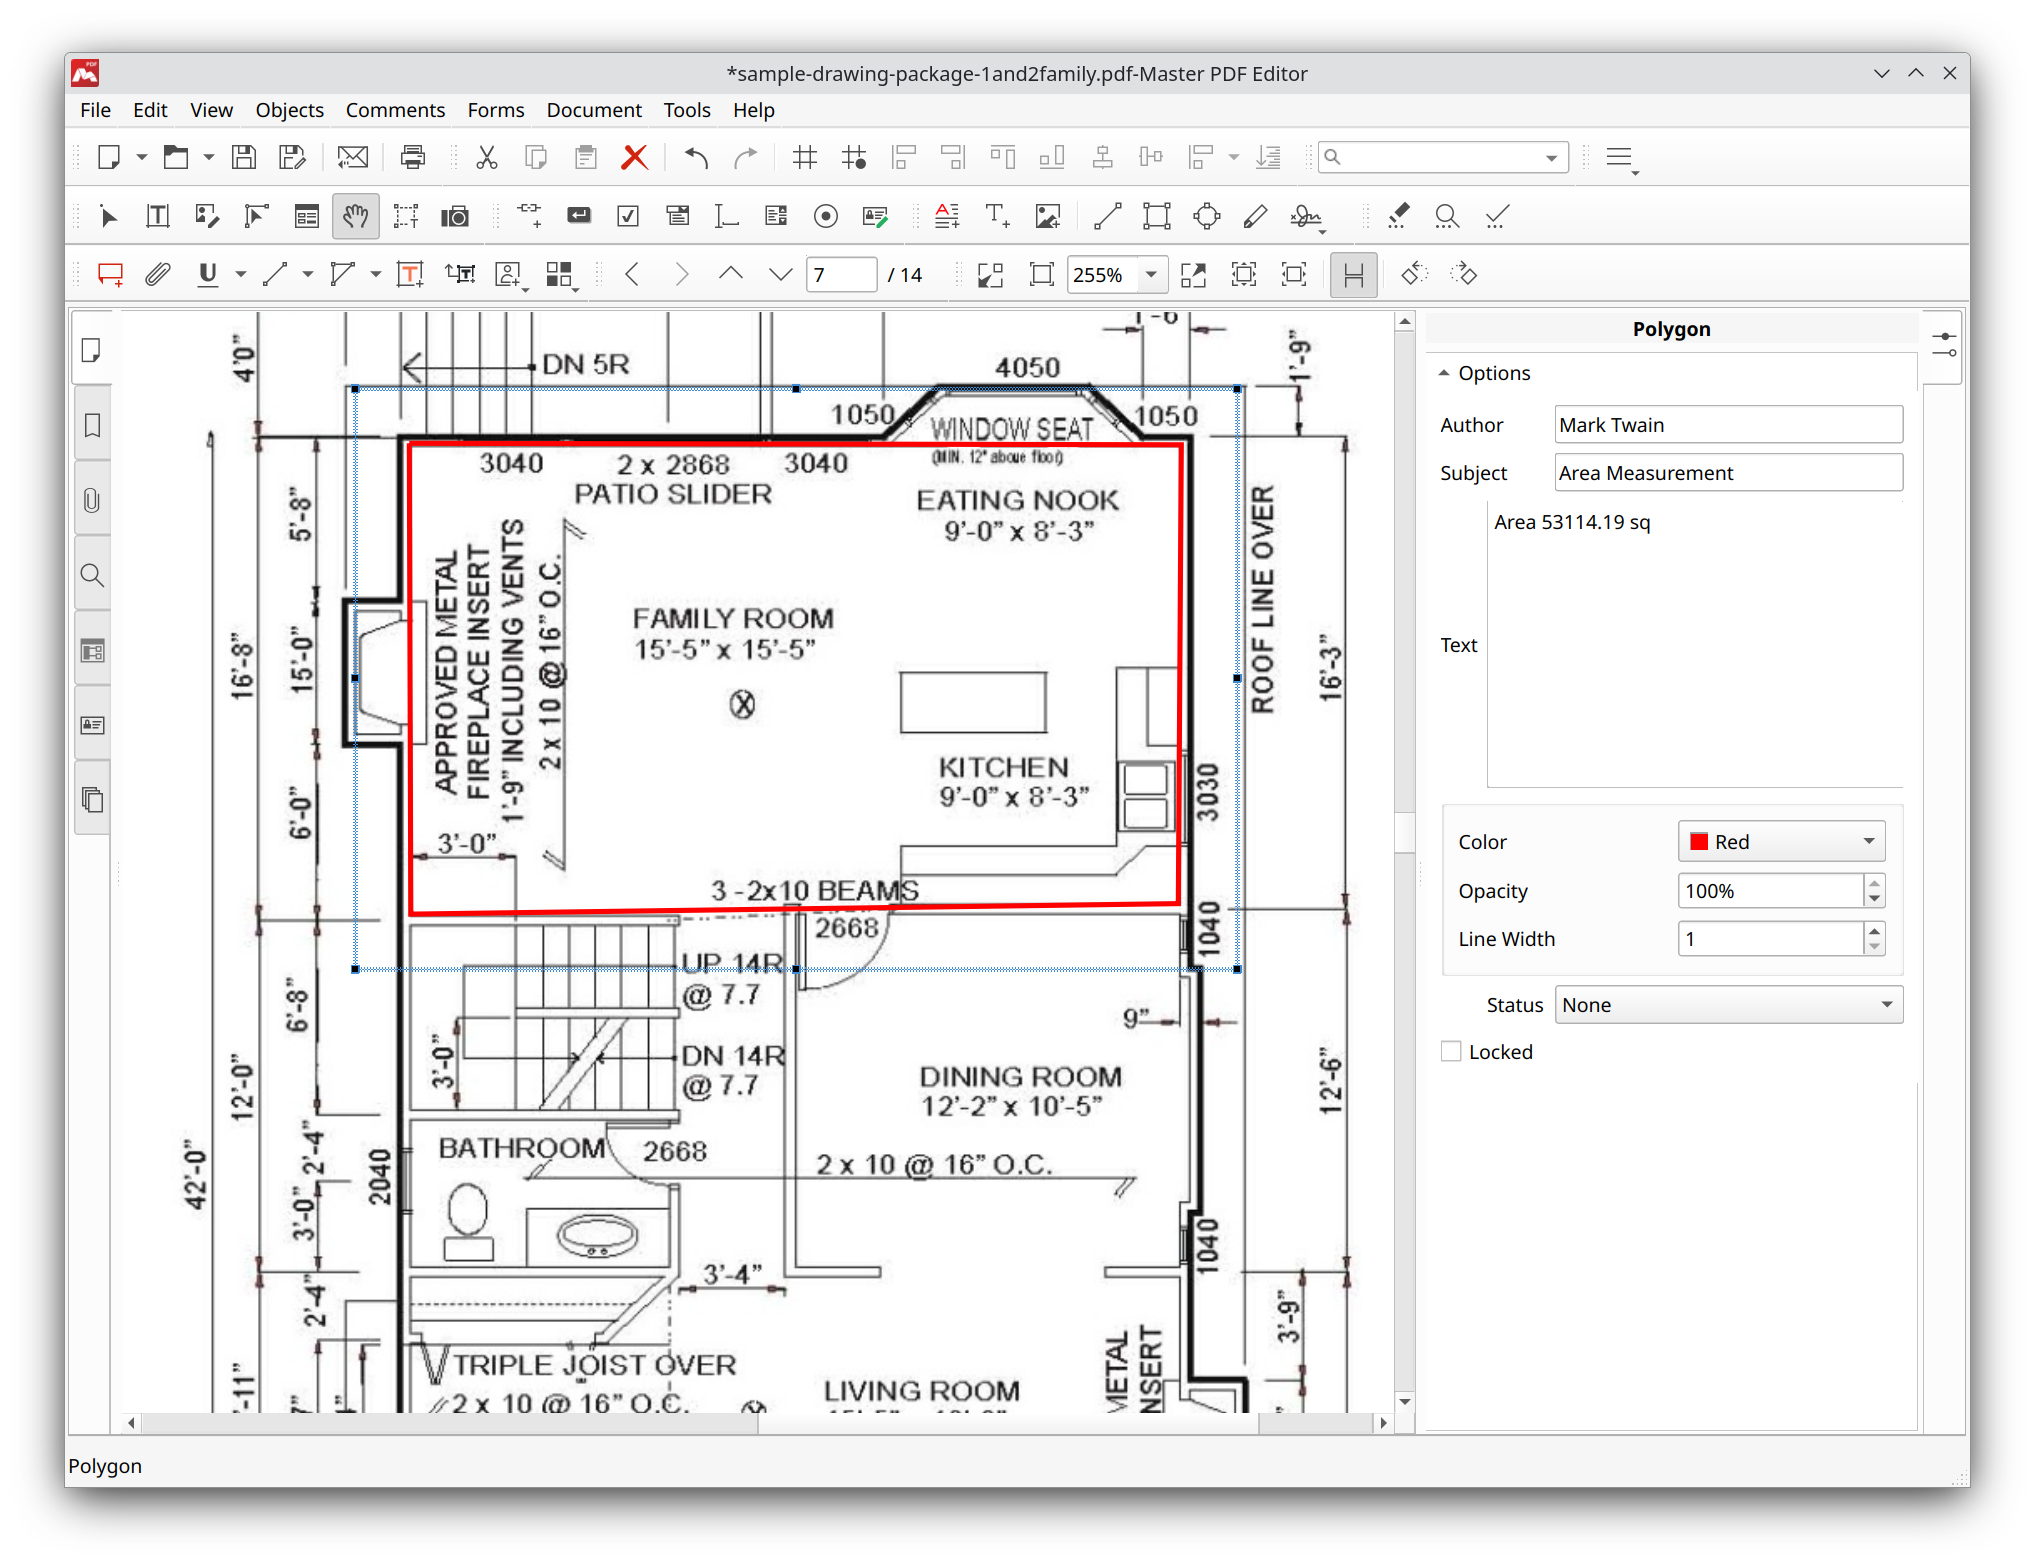 Using area tool in Master PDF Editor